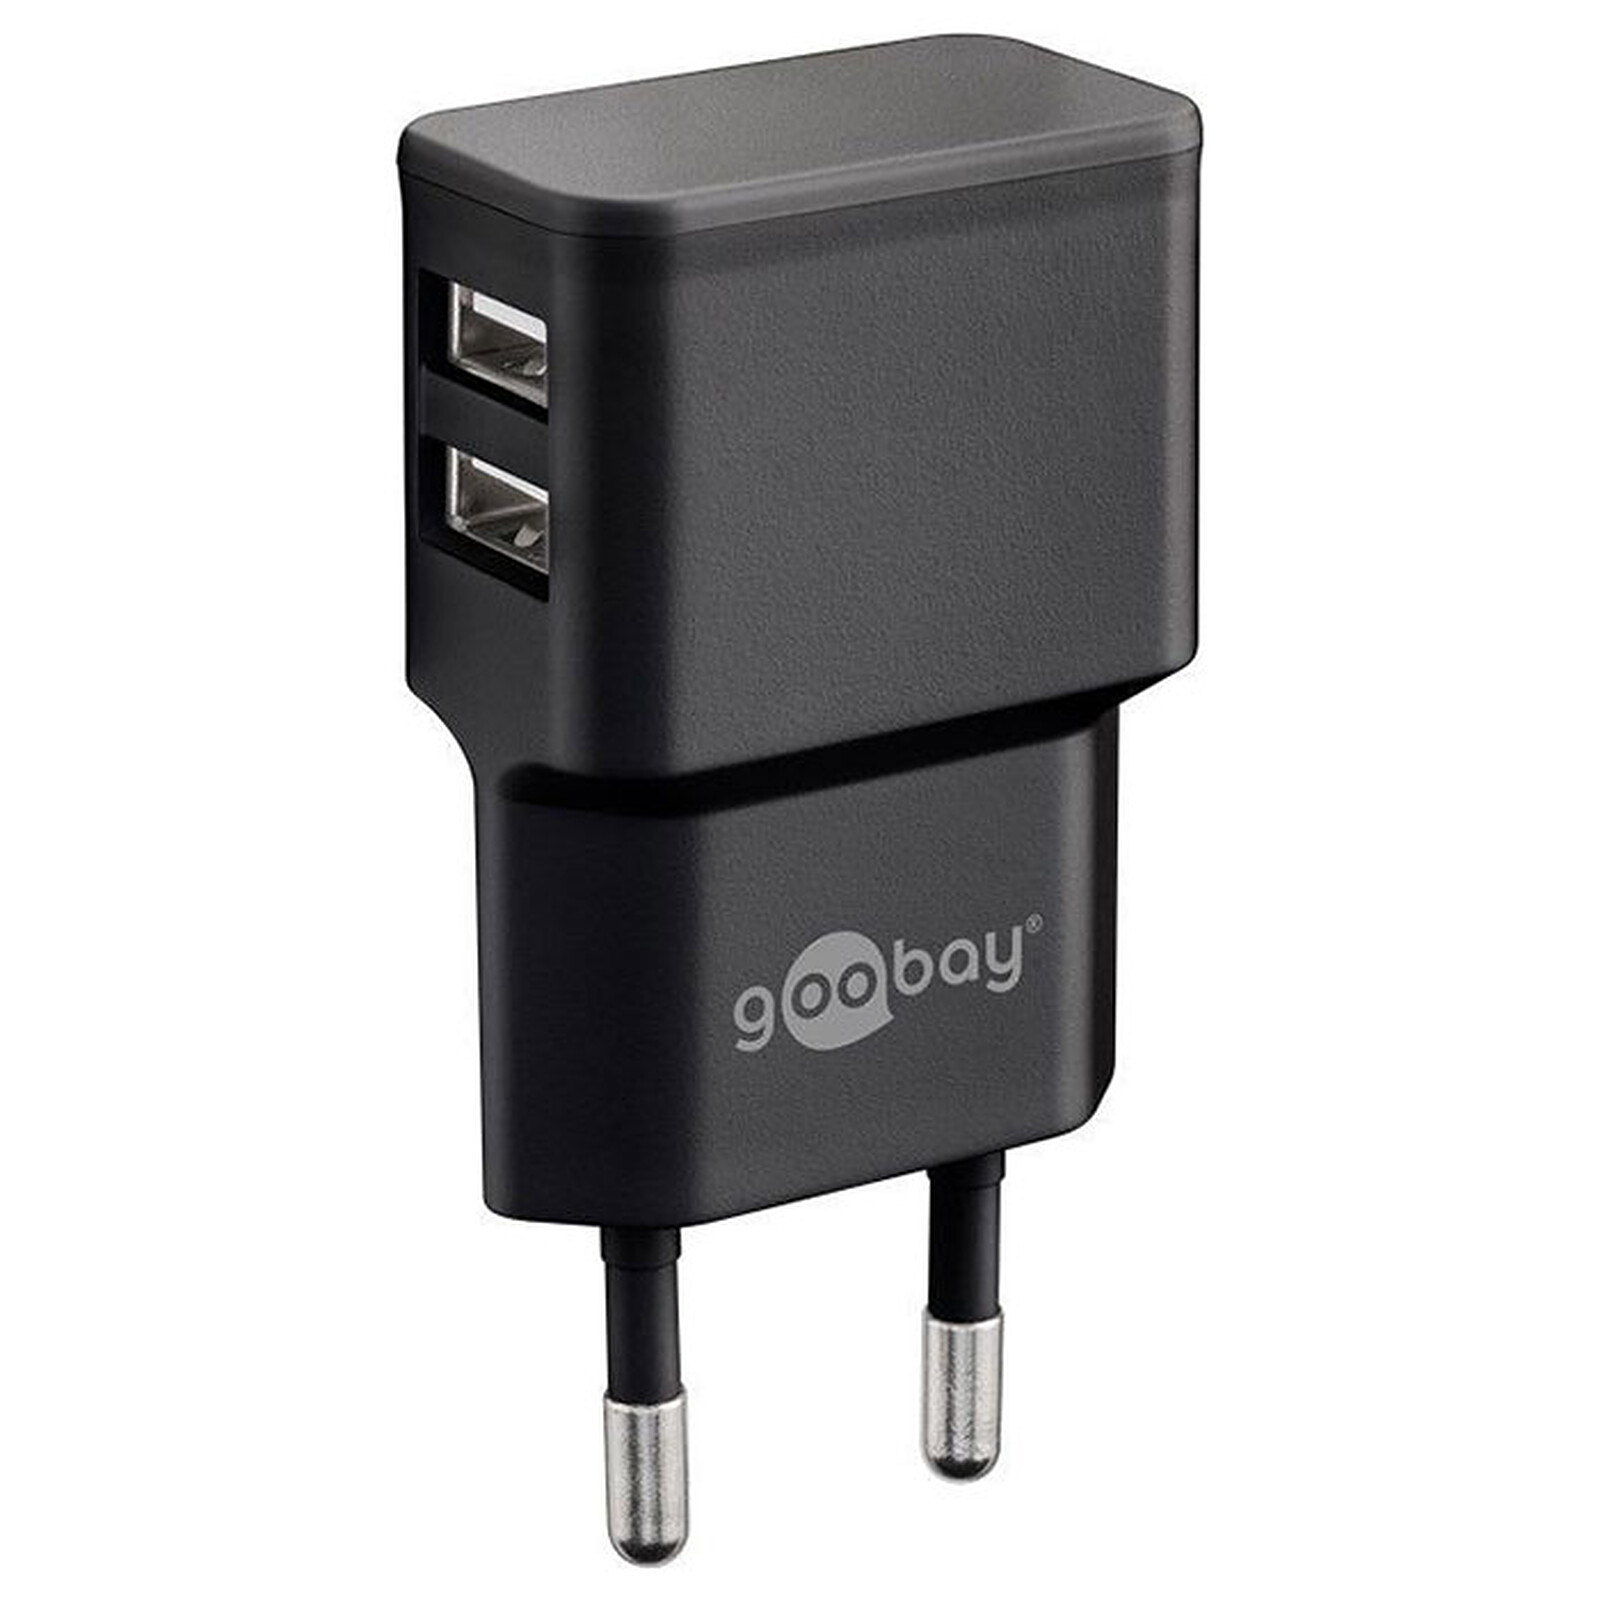 Chargeur double USB : chargeurs 2 ports USB, chargeurs secteurs 2 USB